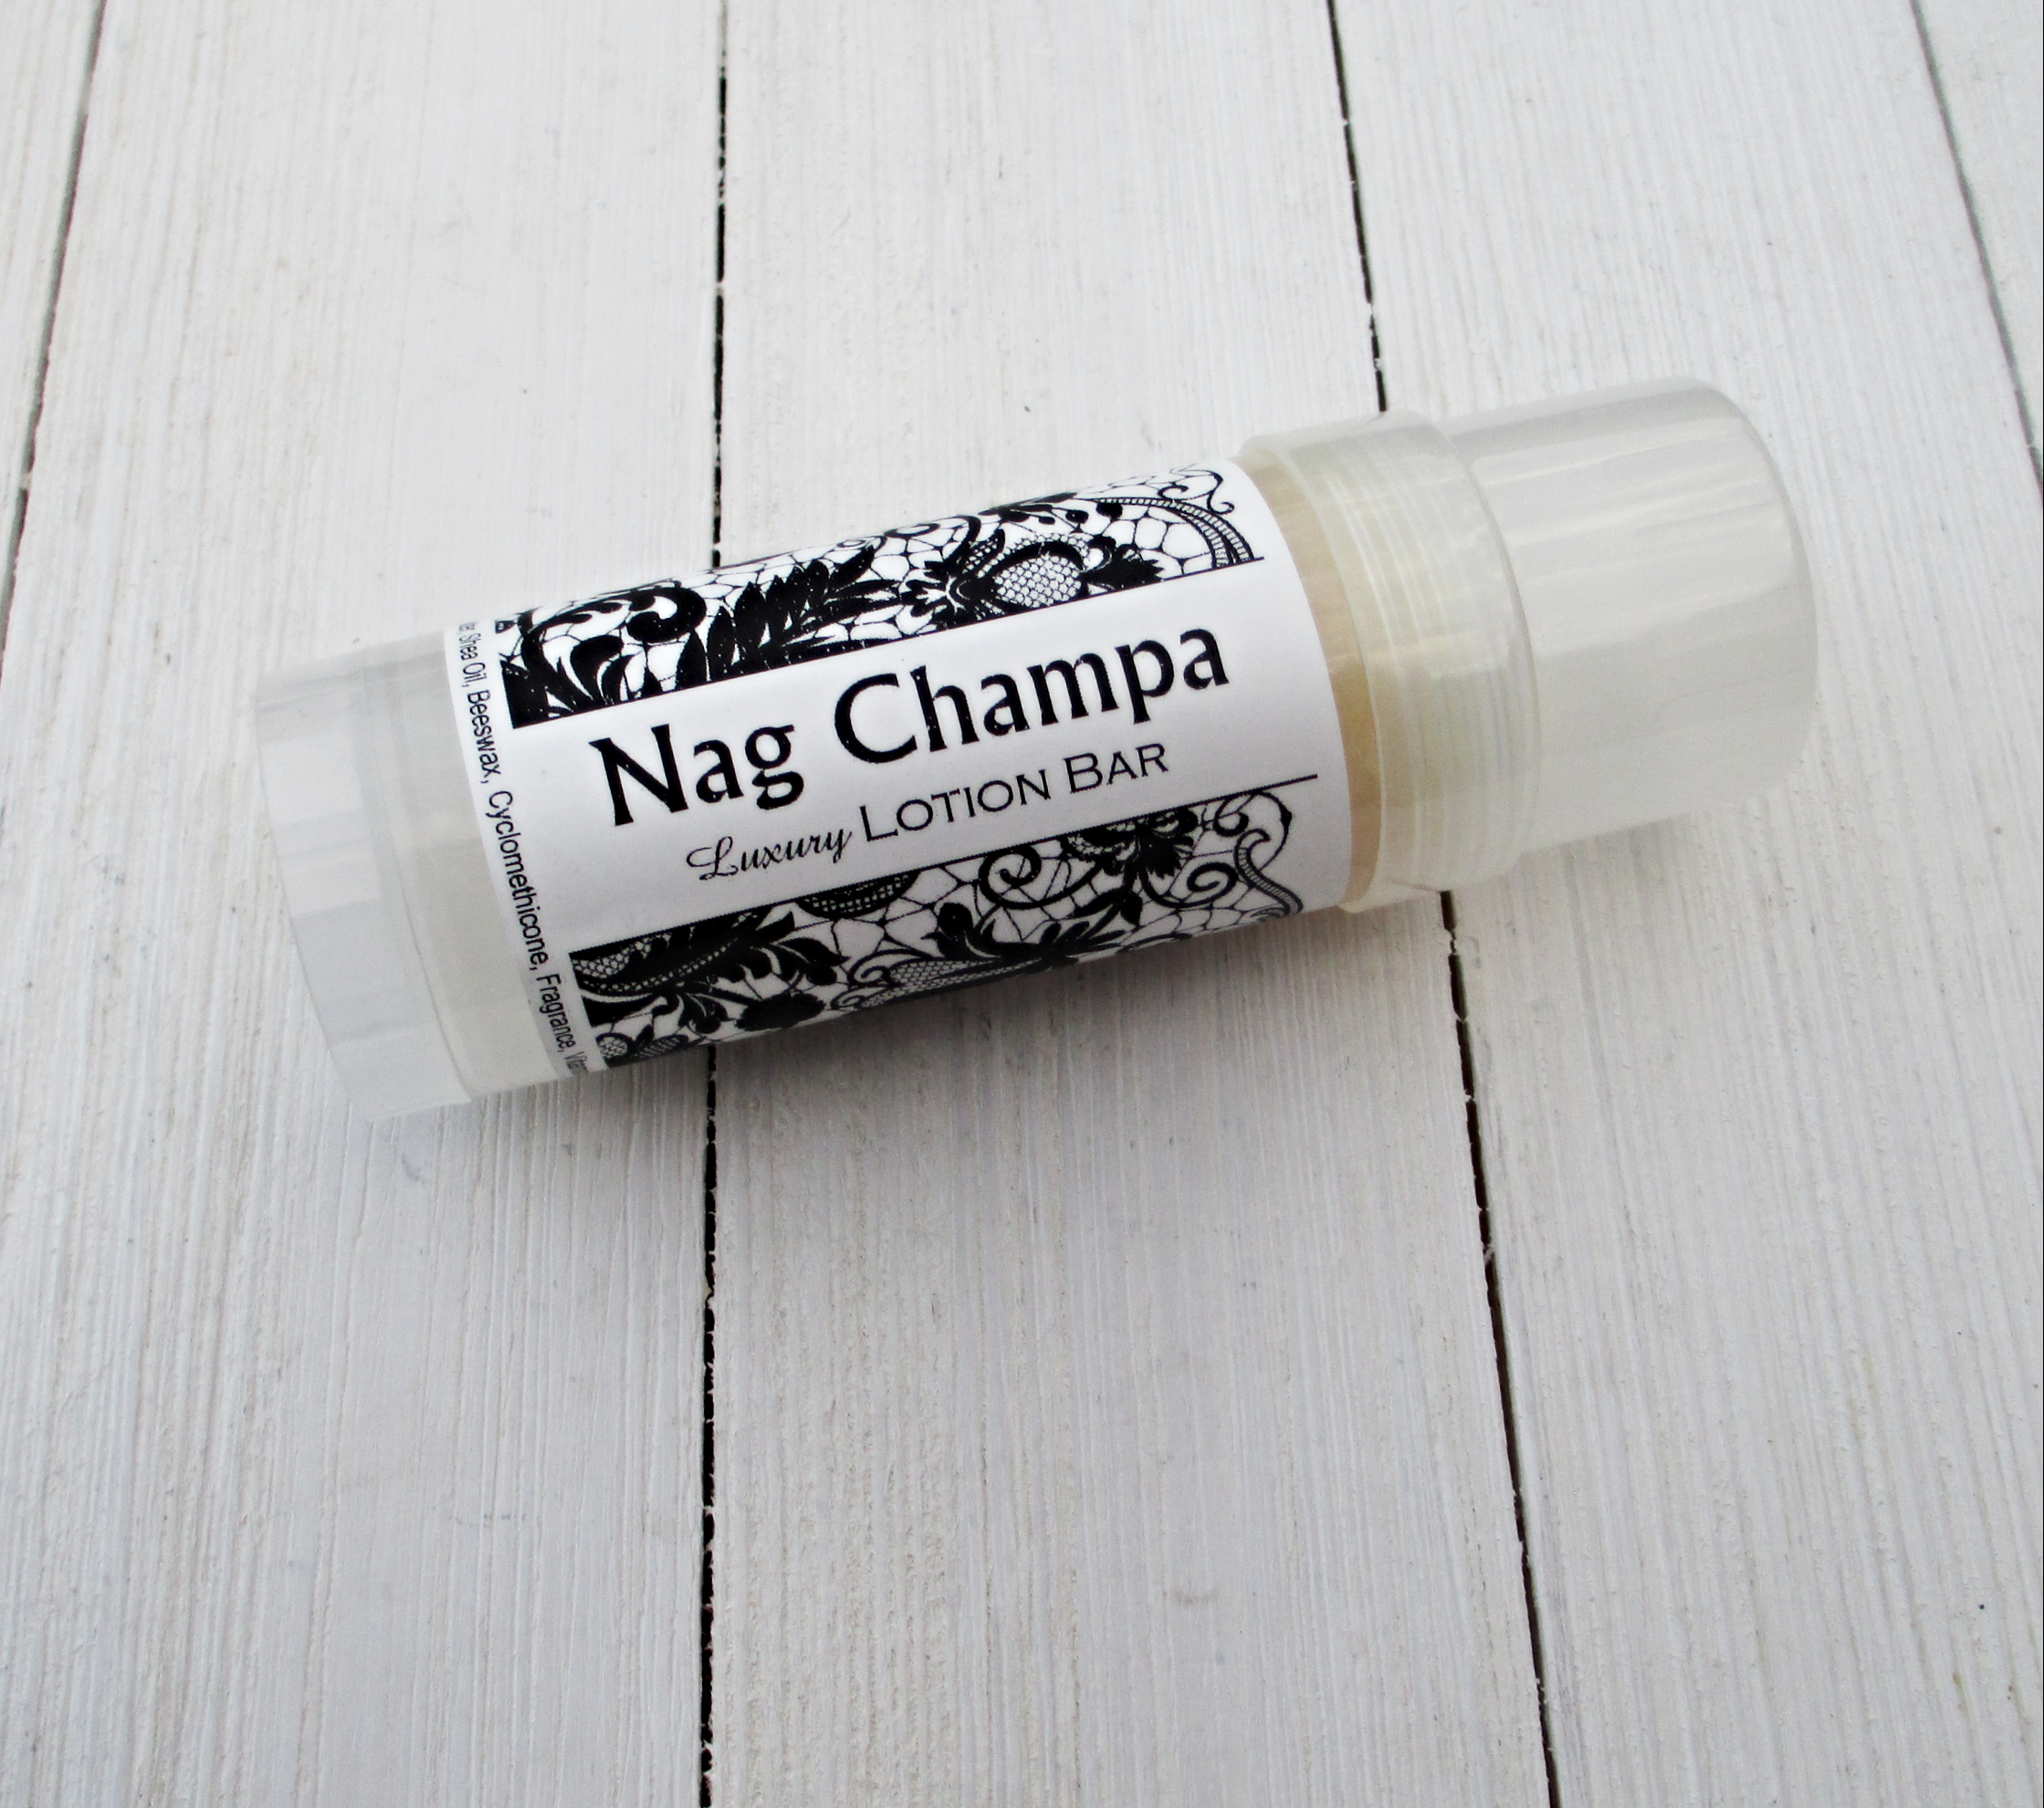 Nag Champa Lotion Bar, solid concentrated formula, 2oz twist up tube